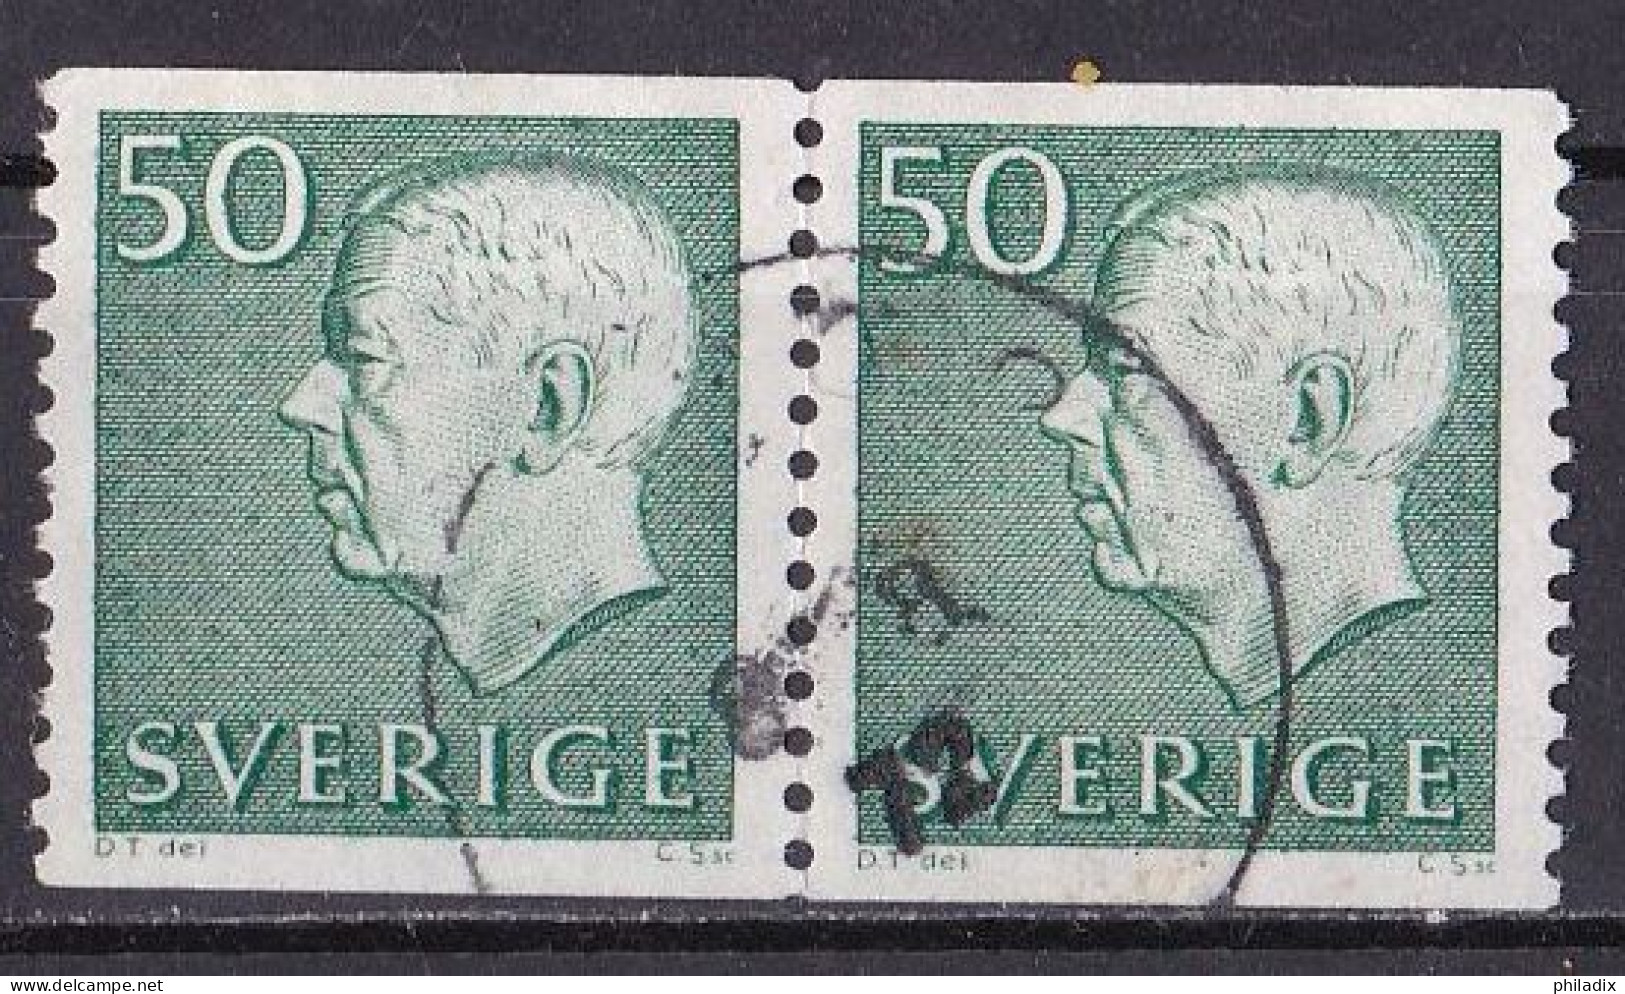 Schweden Marke Von 1962 O/used (A5-12) - Usados